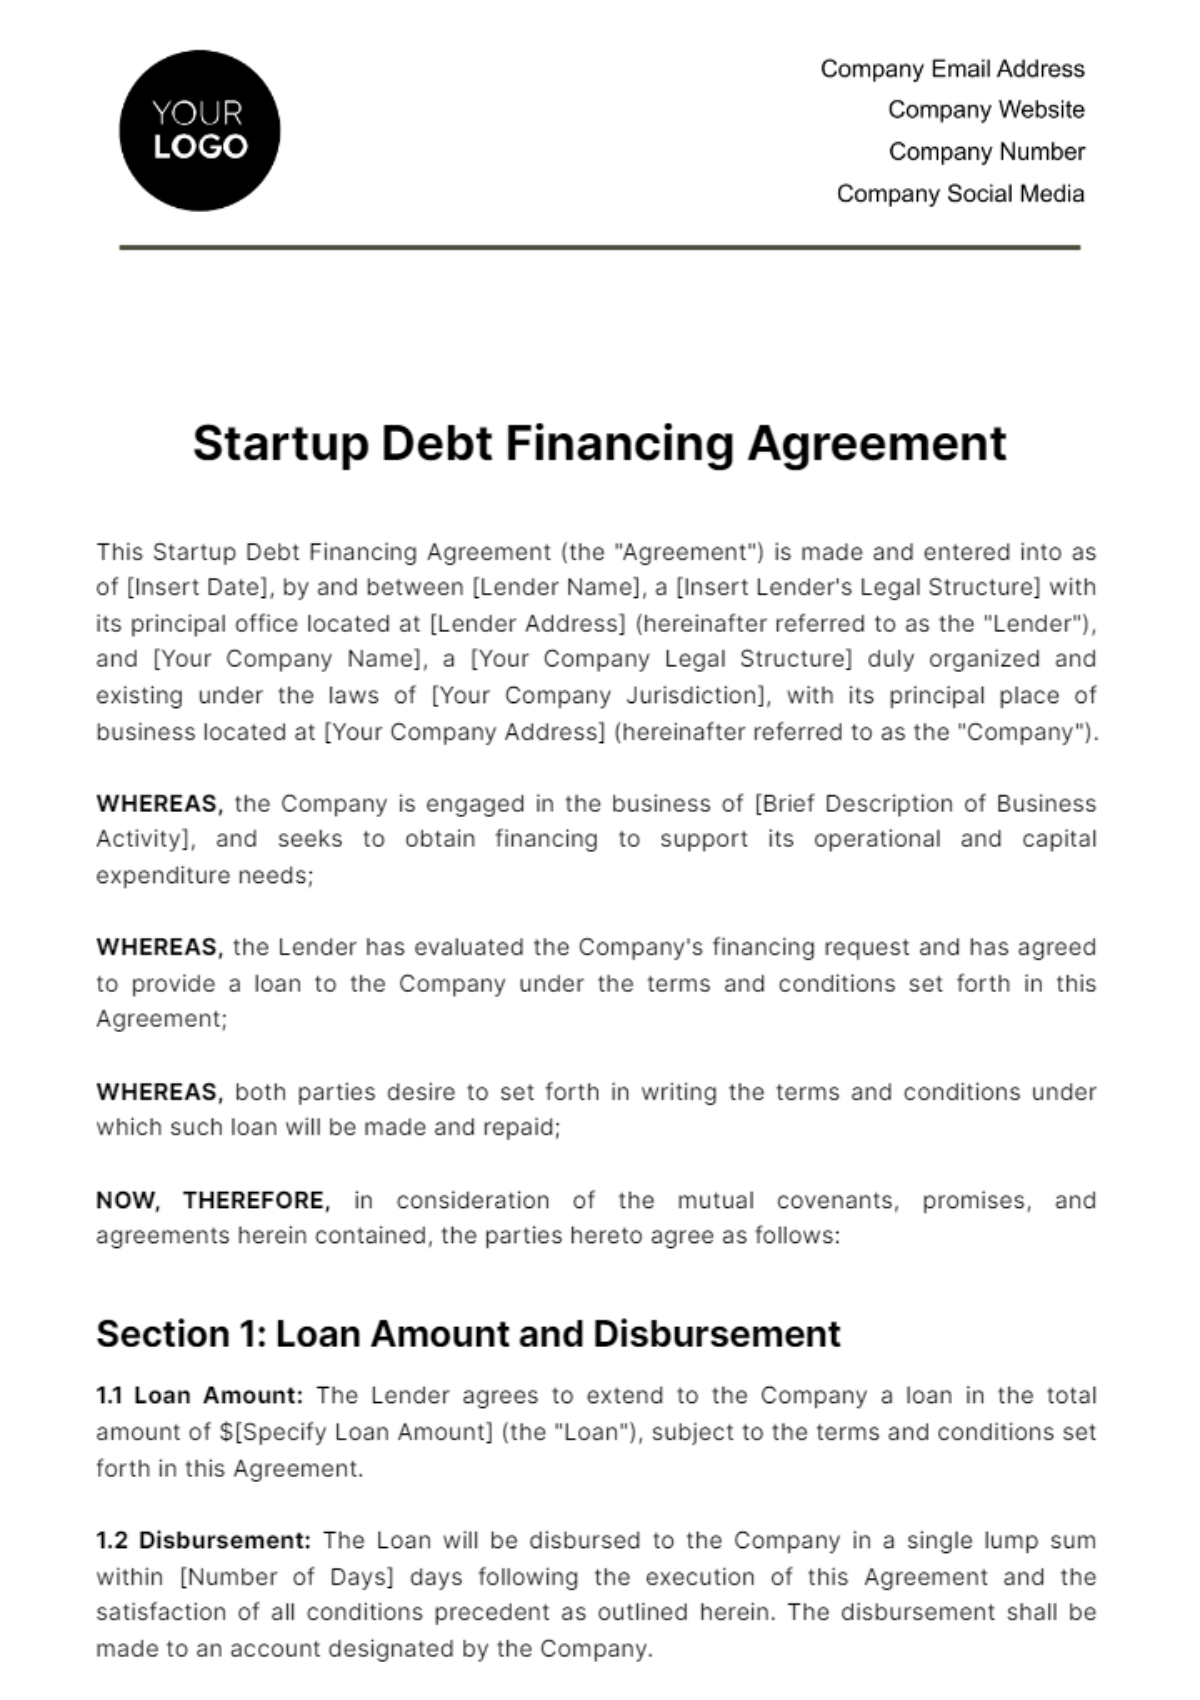 Free Startup Debt Financing Agreement Template